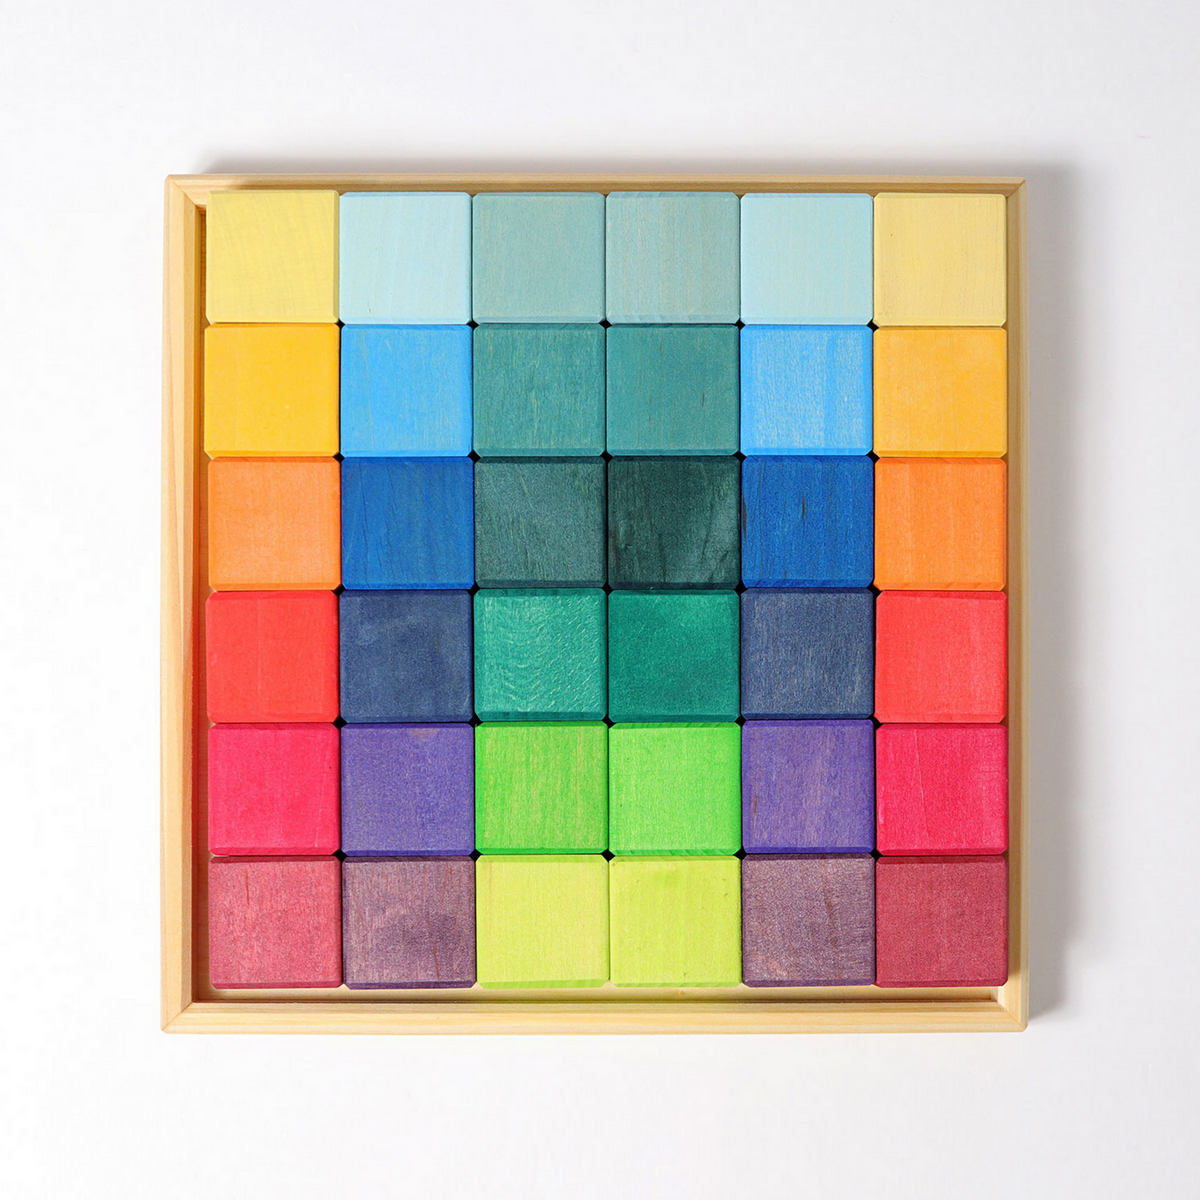 Rainbow Mosaic Square Colored Blocks